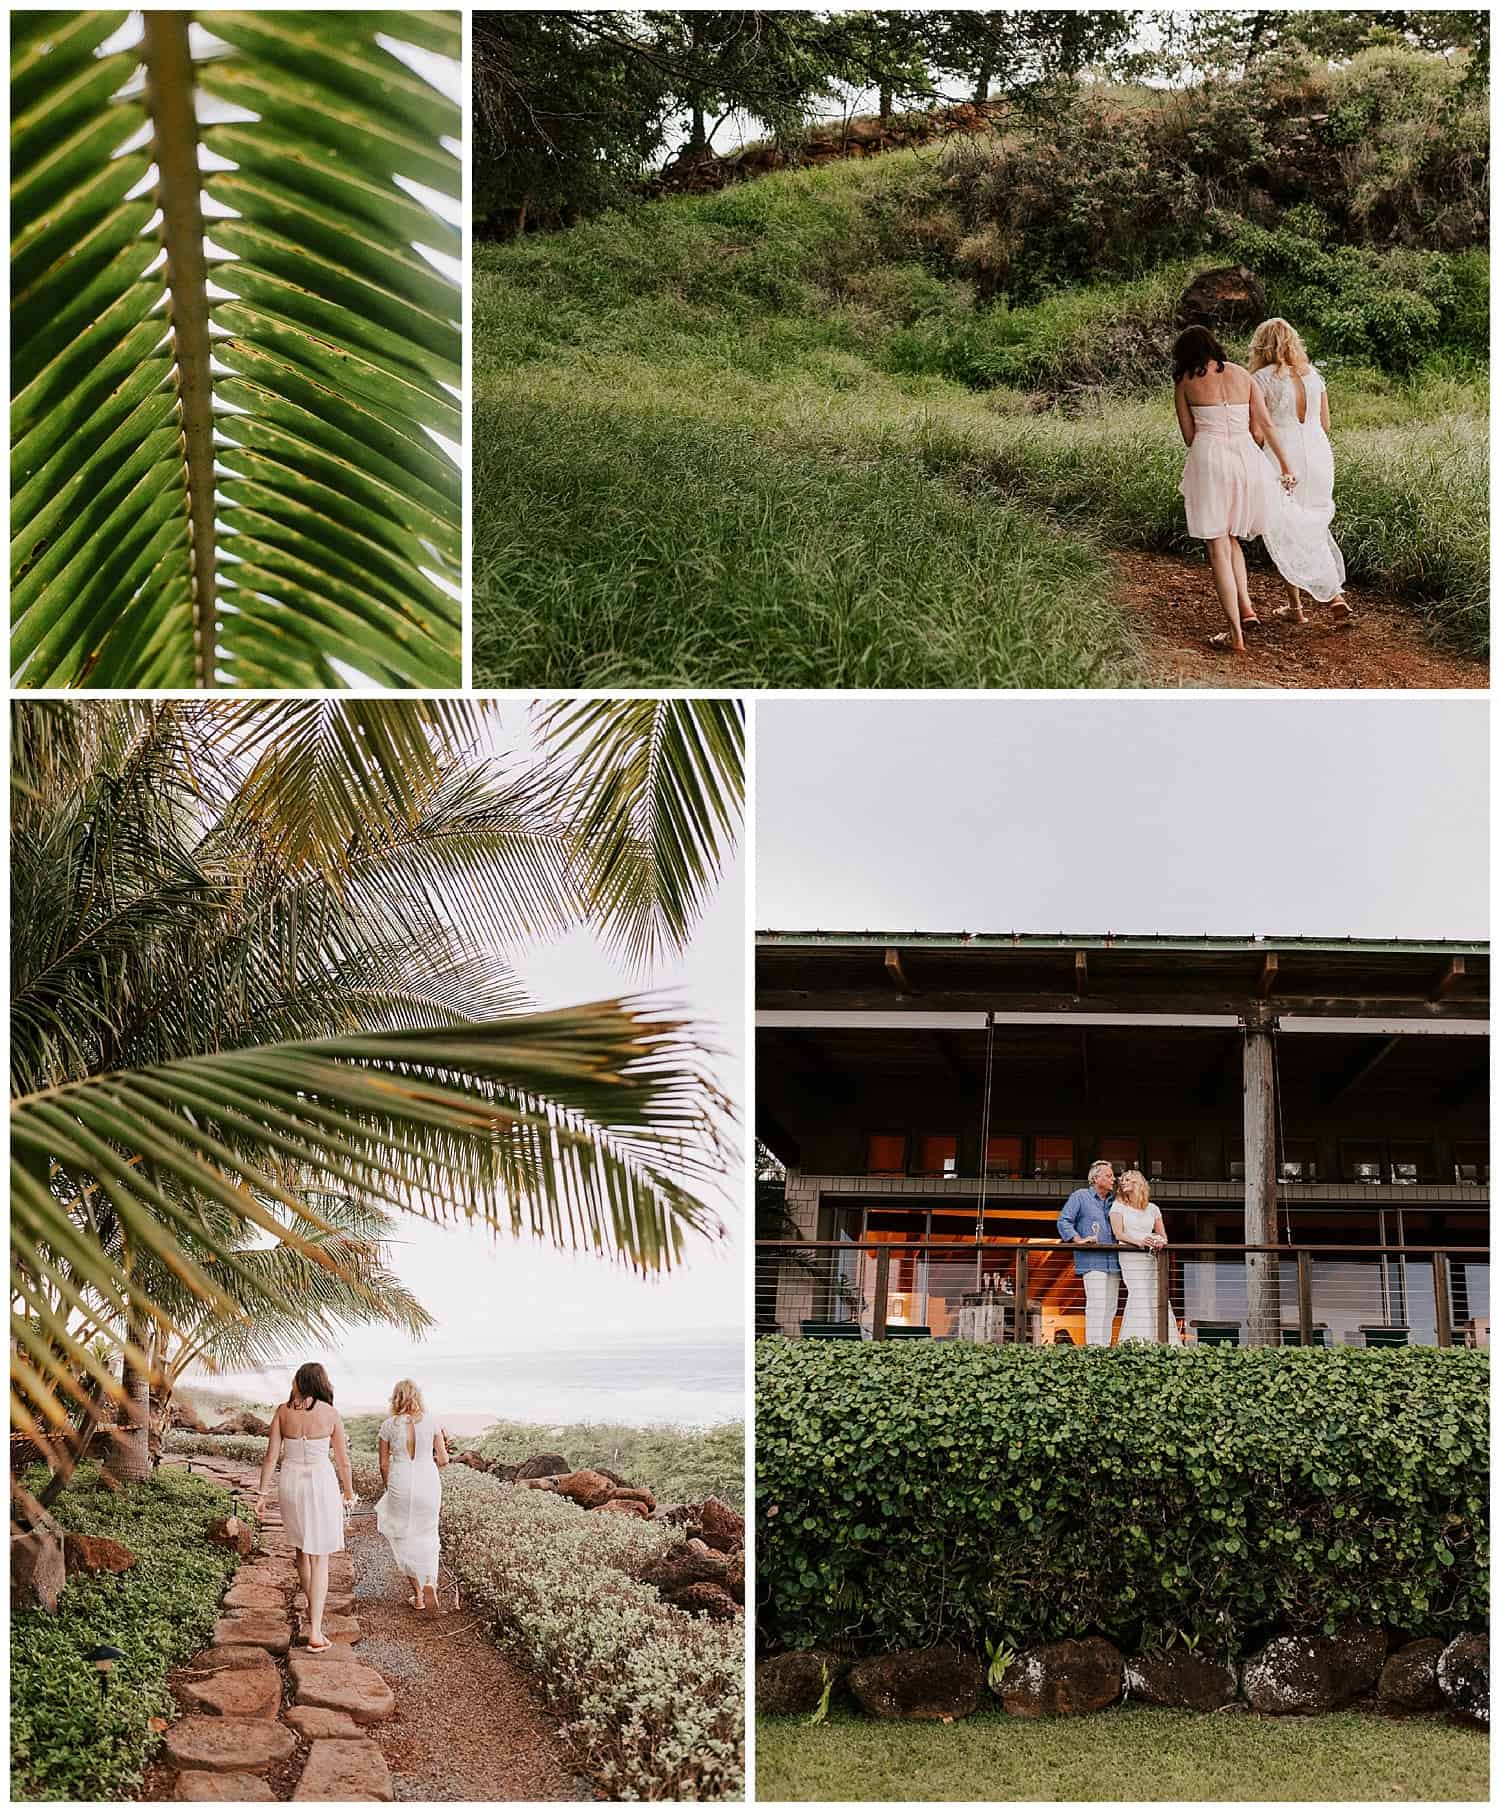 Intimate Molokai wedding by Hawaii wedding photographer Kyle Goldie of Luma Weddings